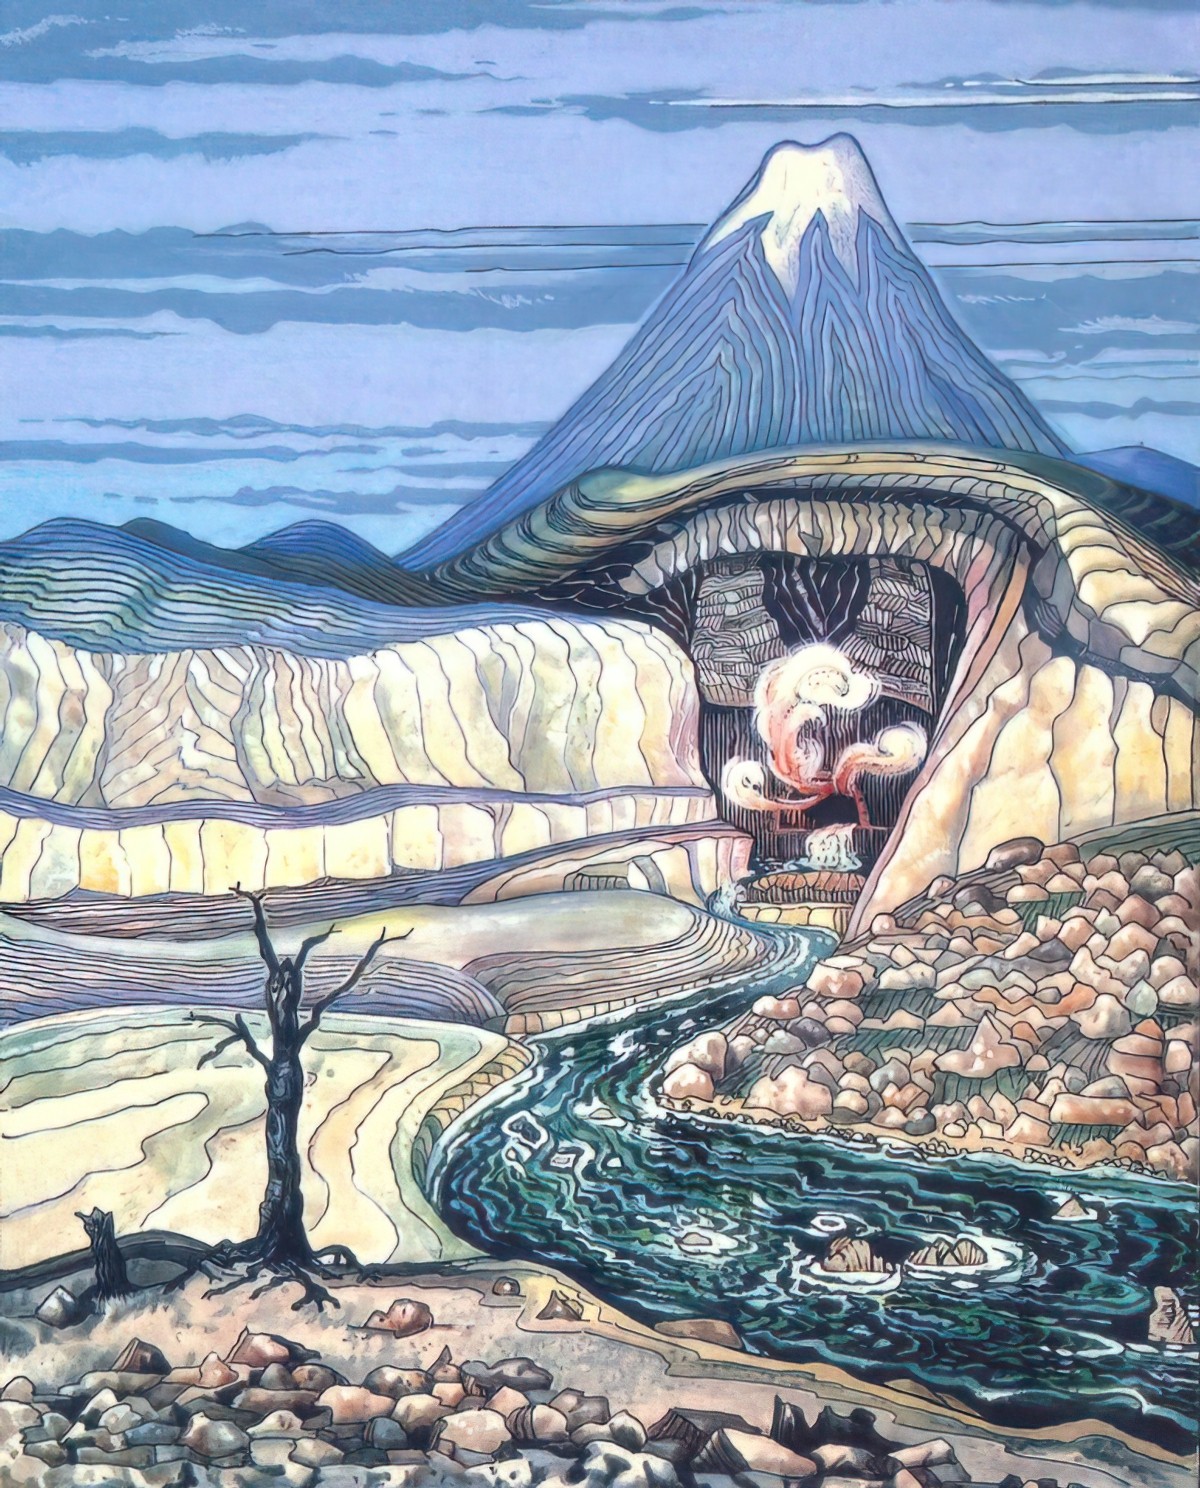 J.R.R. Tolkien (1892 - 1973) 1937 The Front Gate illustration for The Hobbit